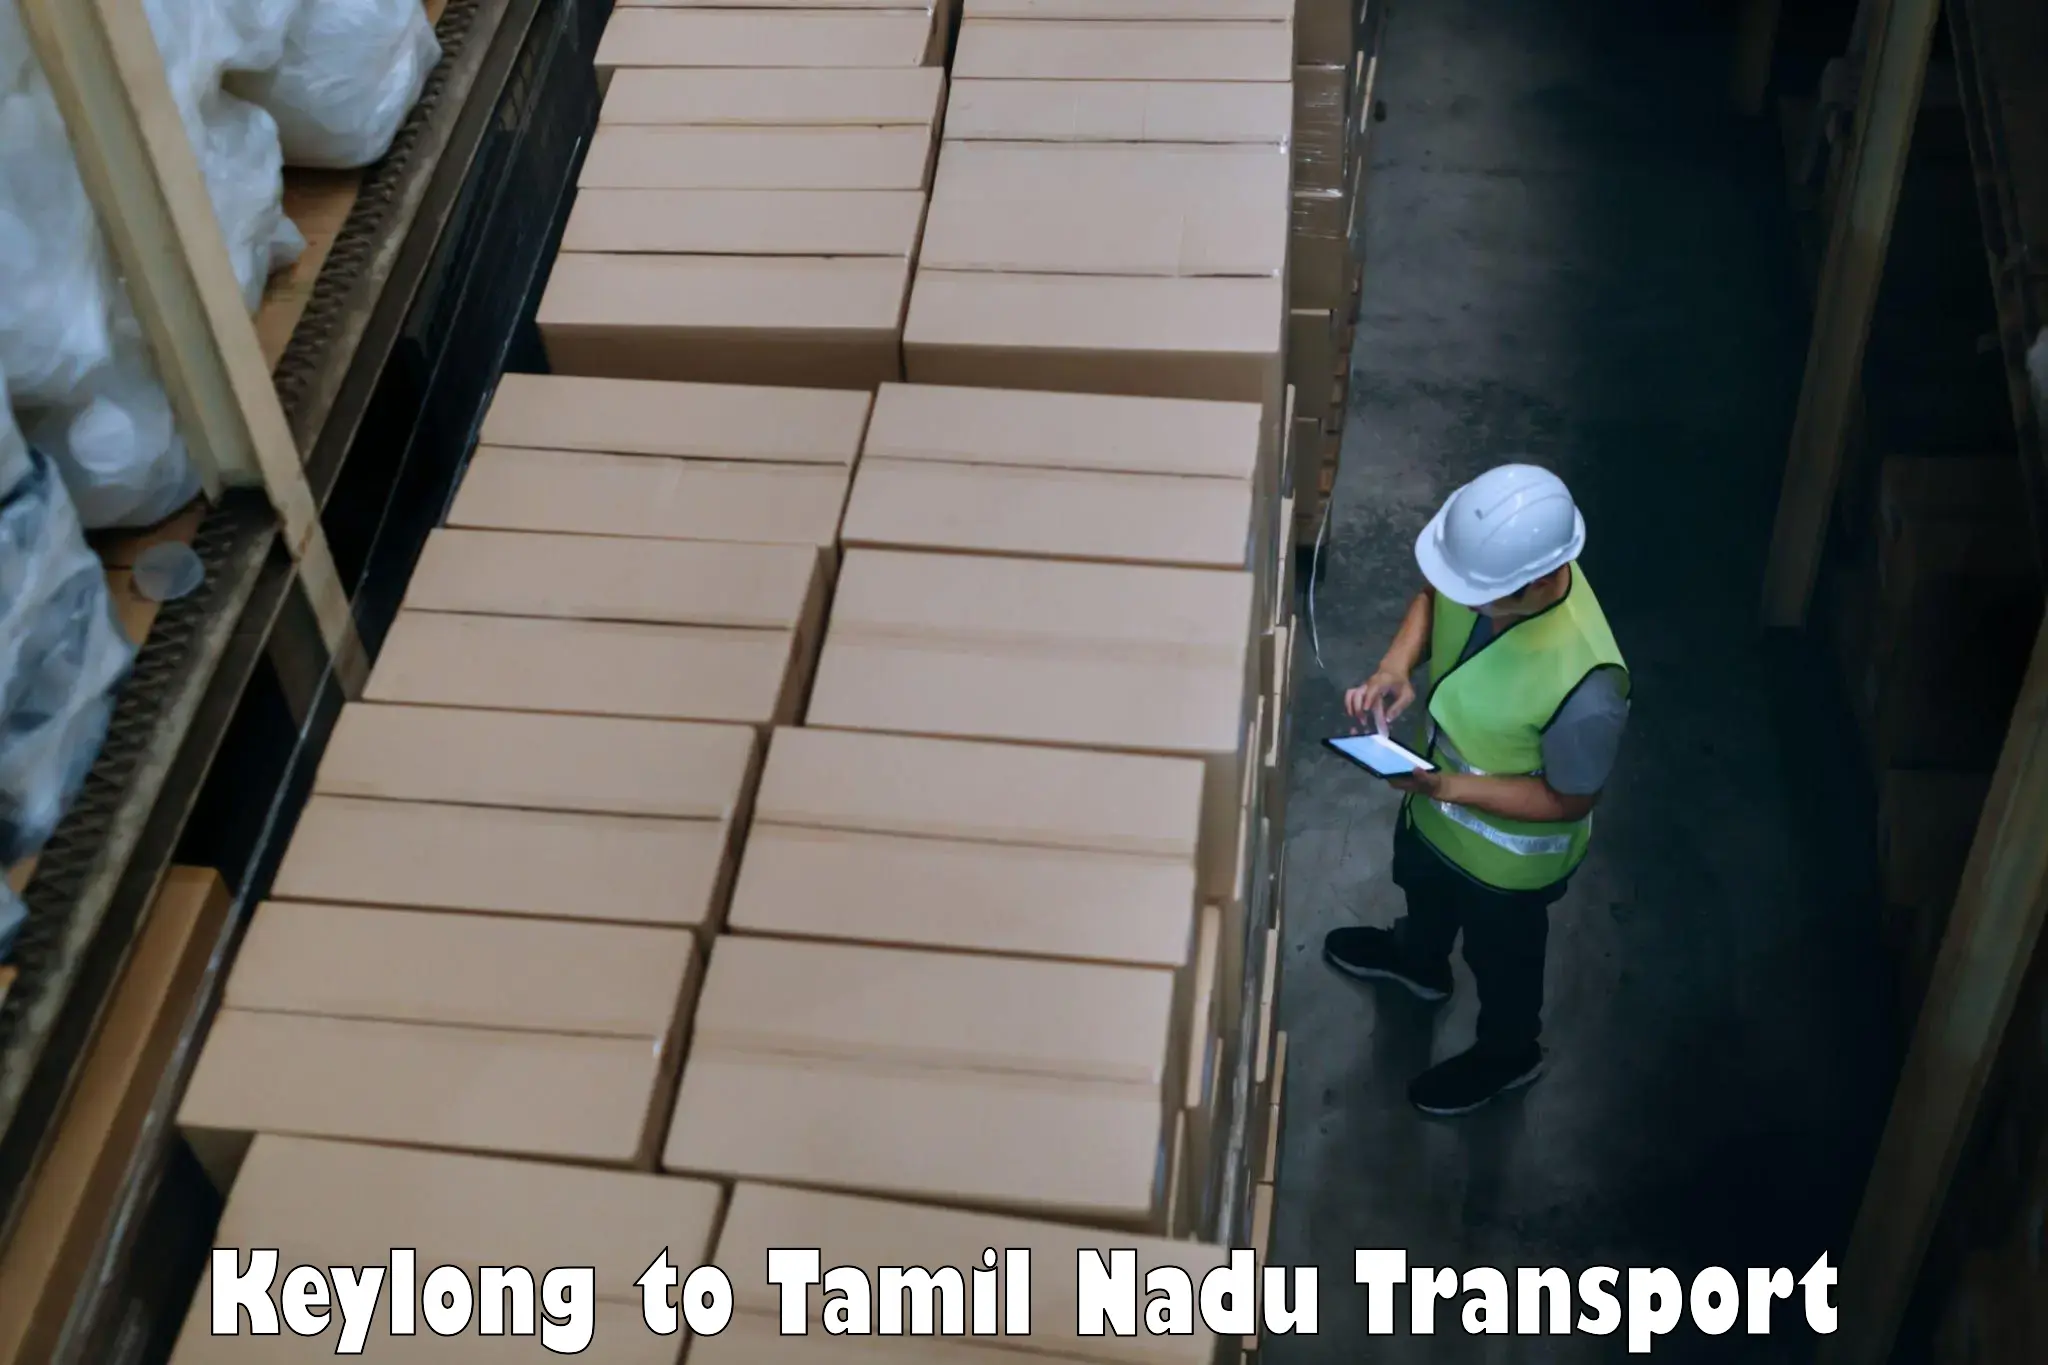 Nearest transport service Keylong to Tiruvallur